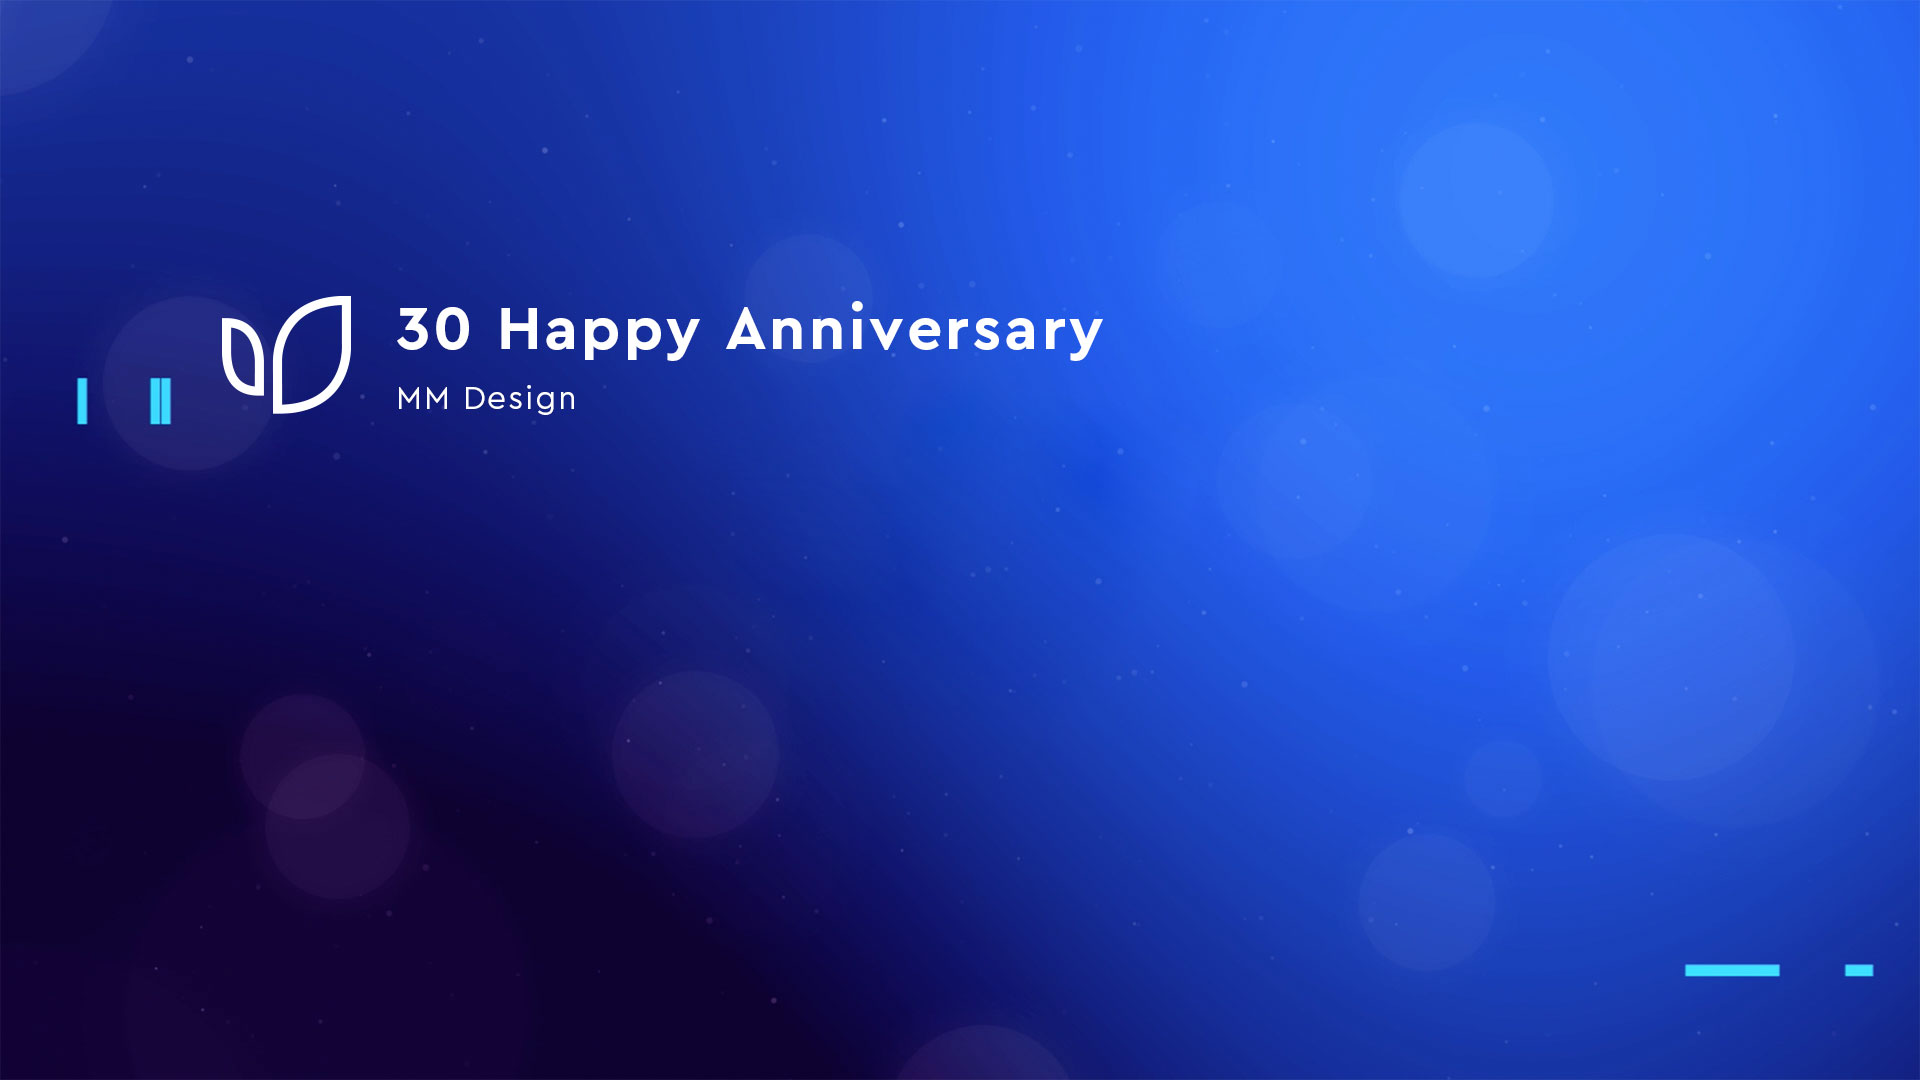 10, 20, 30! Happy Anniversary MM Design